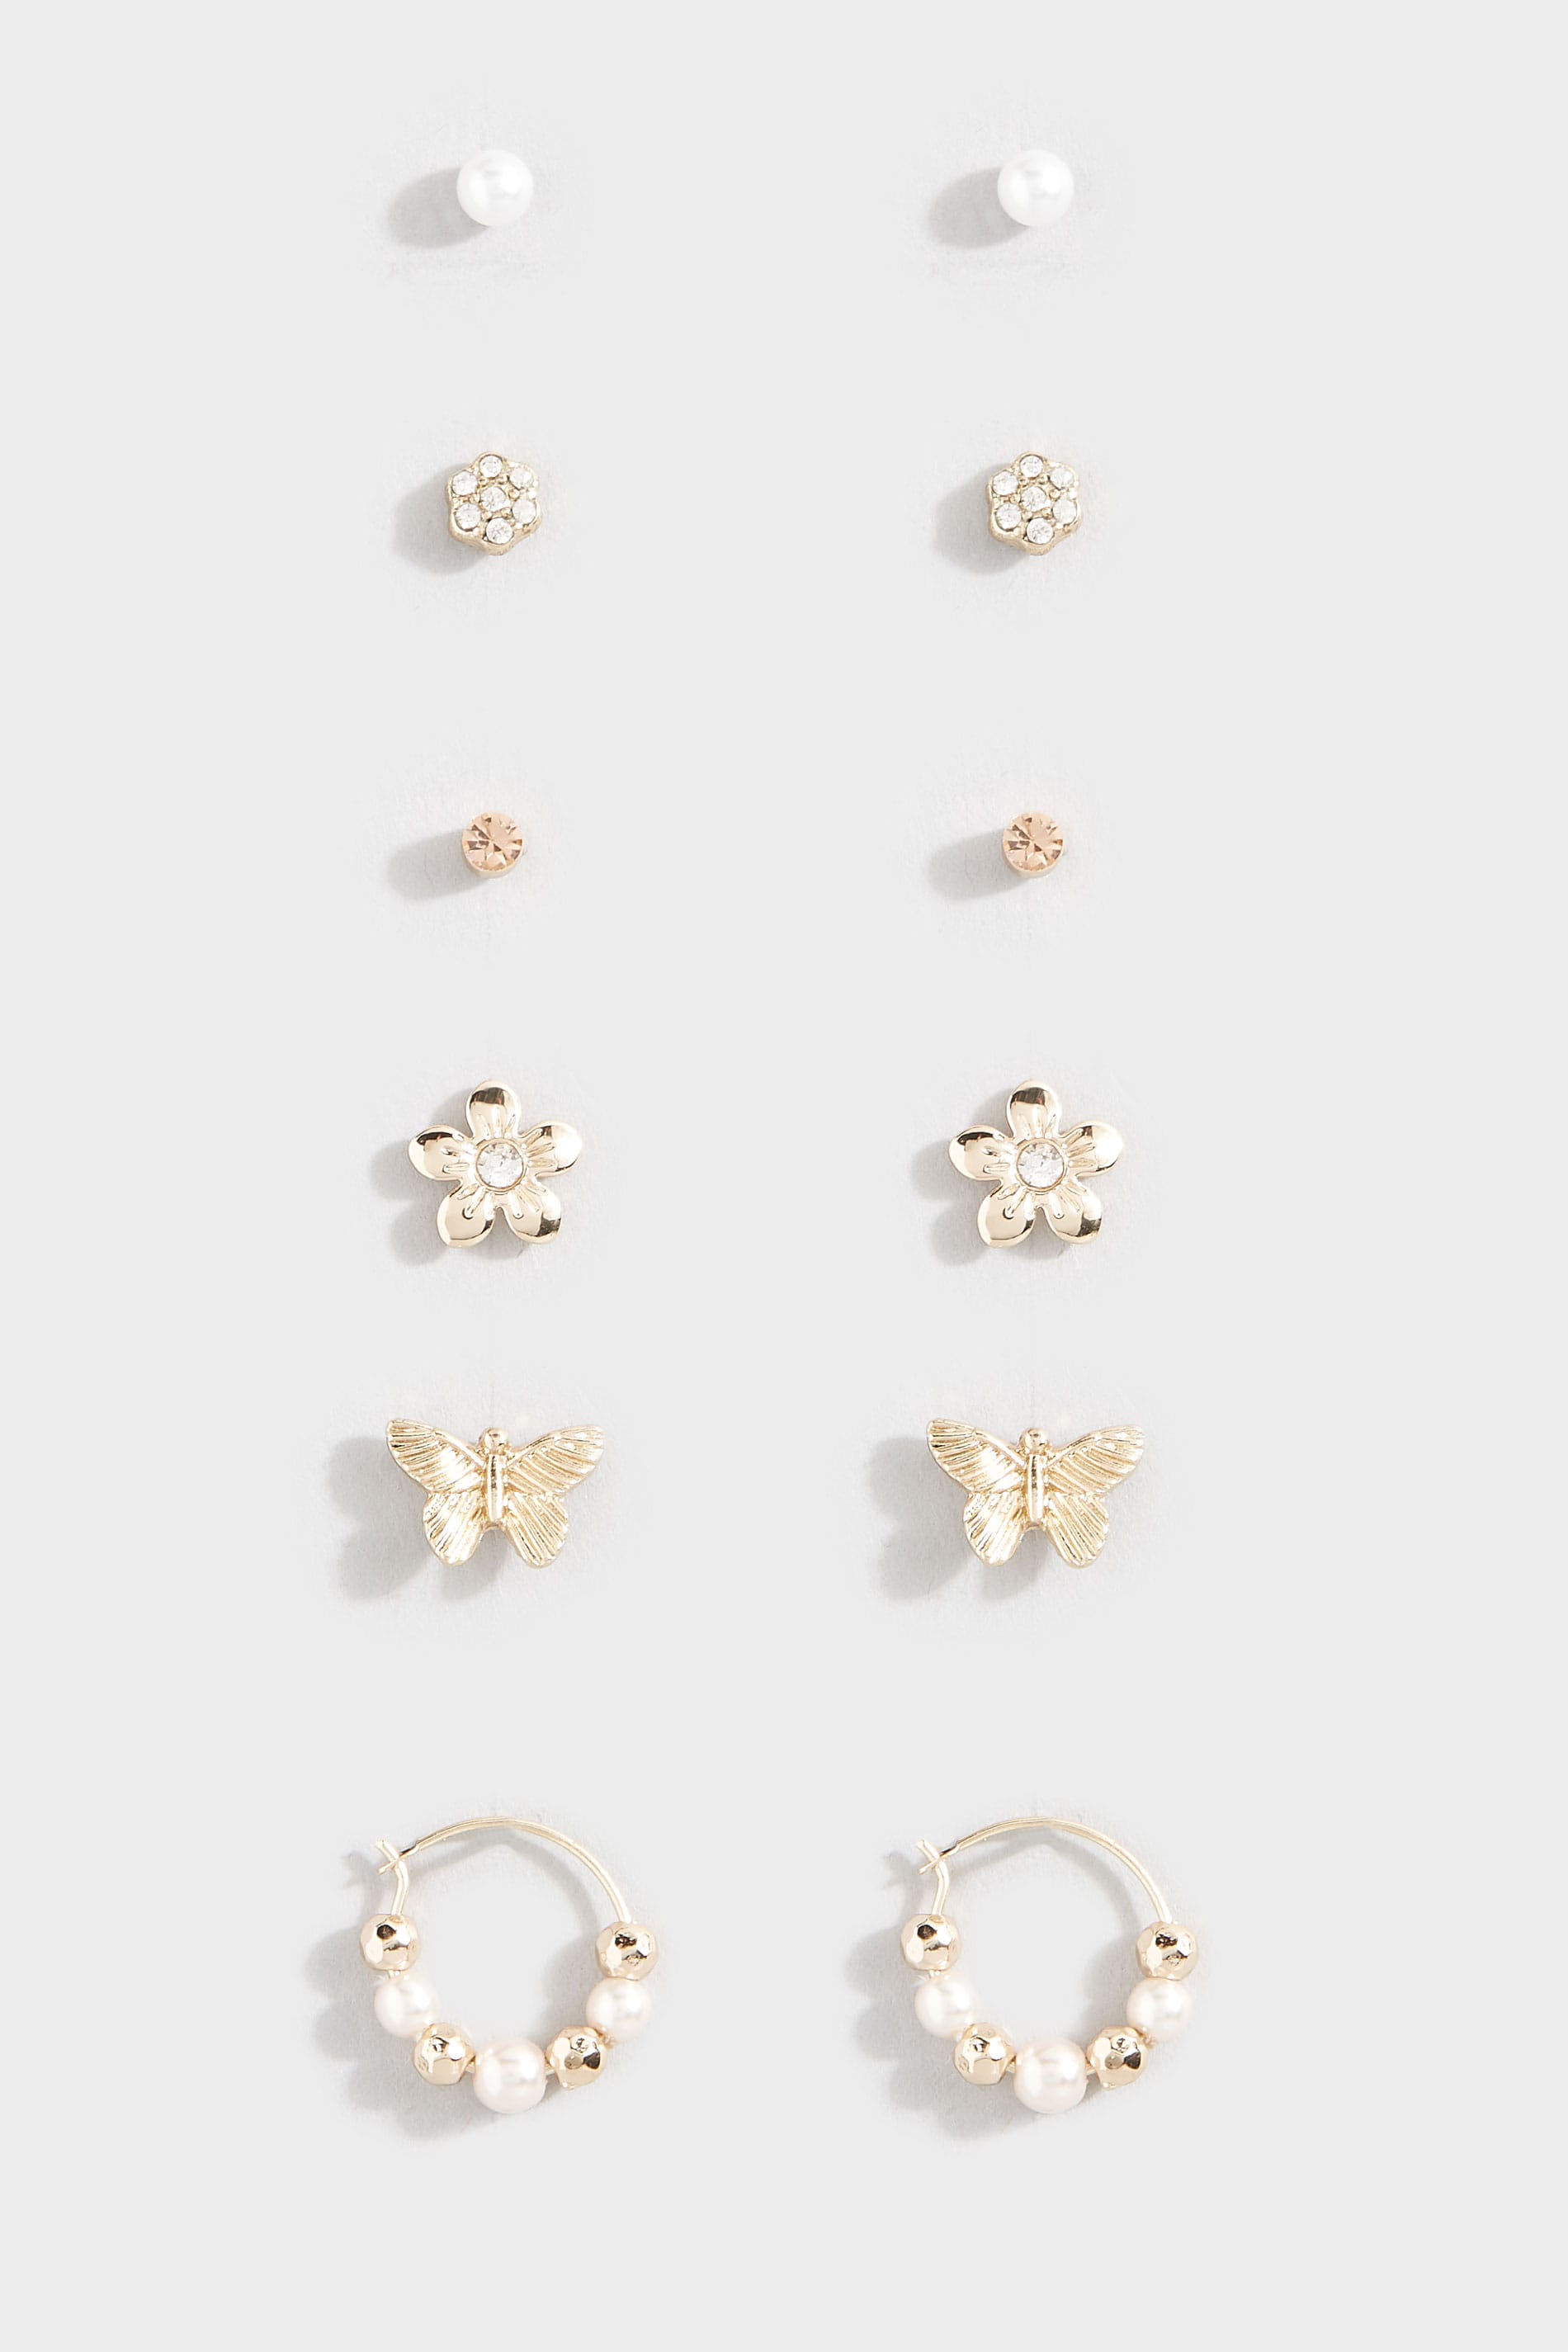 6 PACK Gold Assorted Butterfly Floral Earrings_4de5.jpg